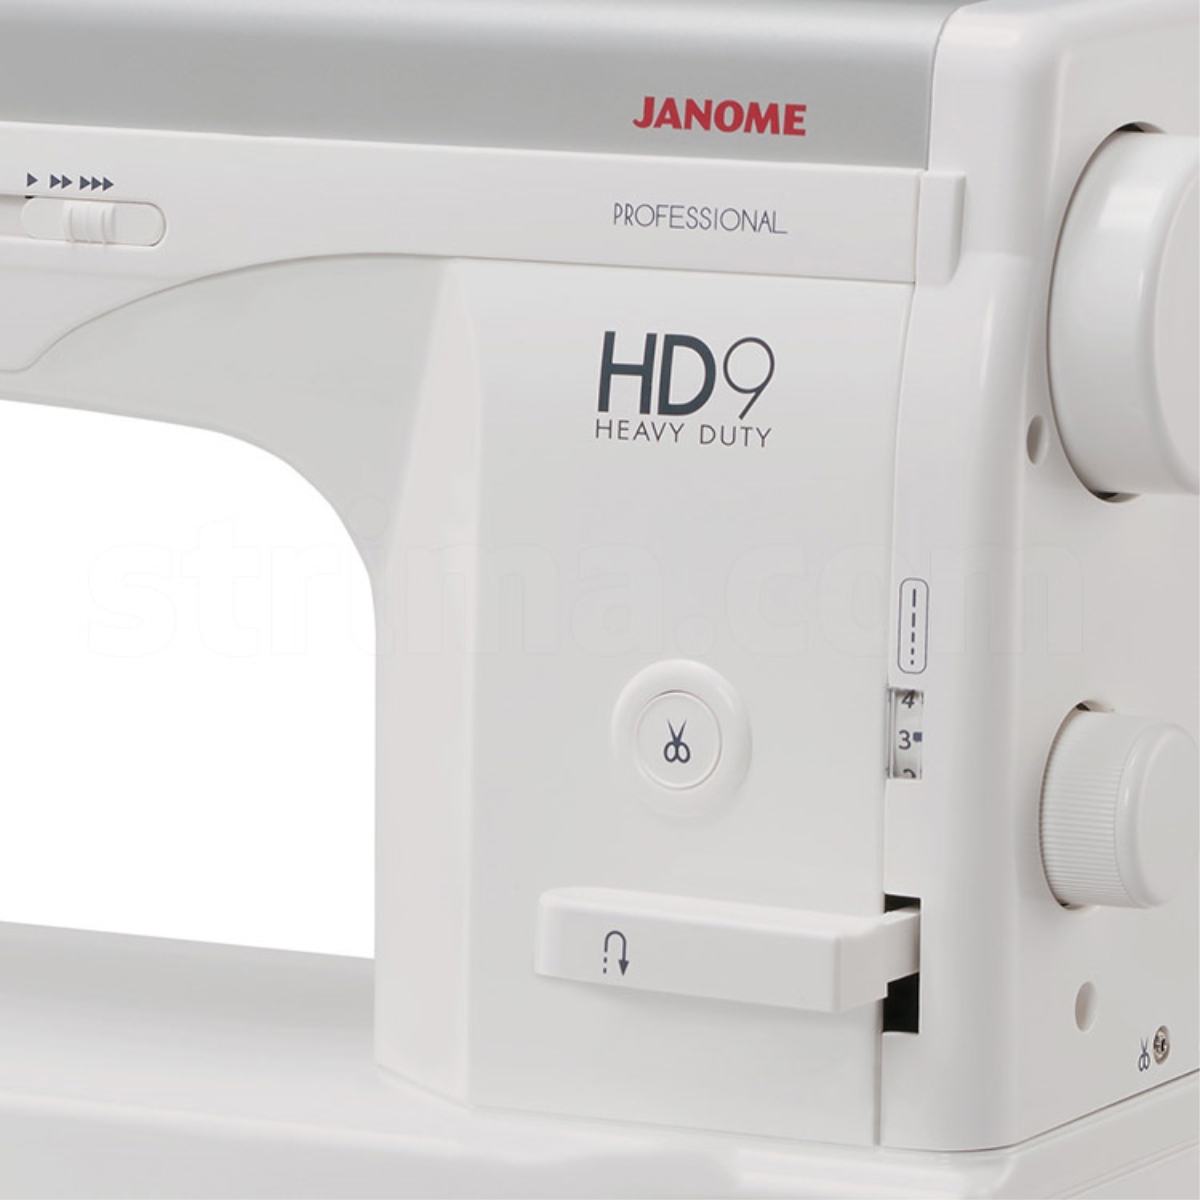 JANOME HD9 Professional Nähmaschine